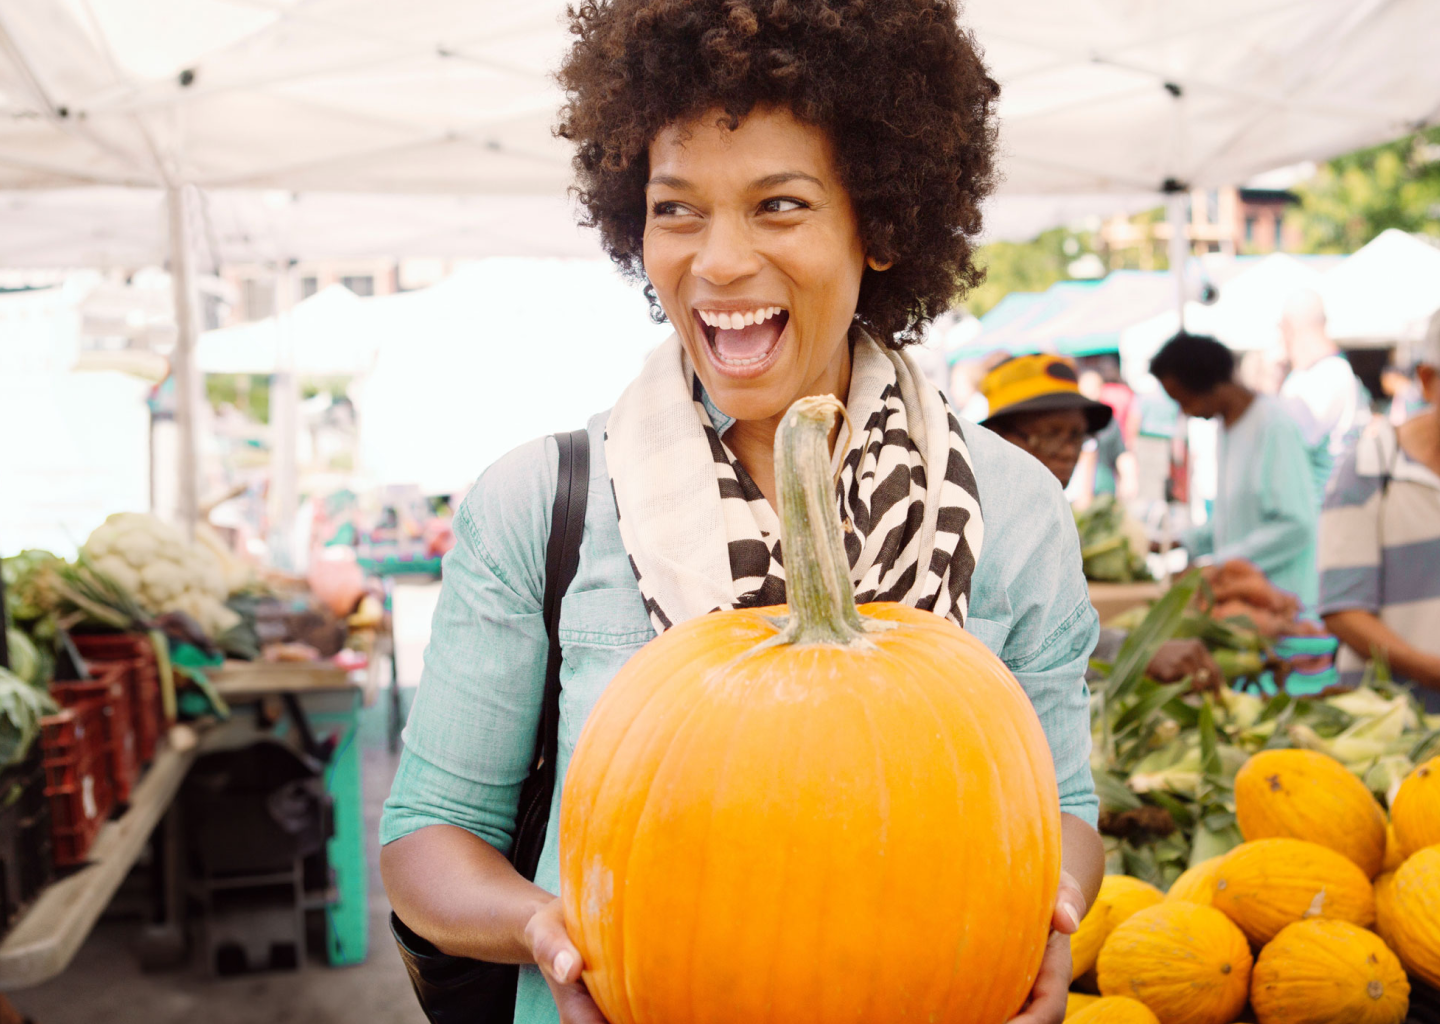 A smiling woman holding a pumpkin